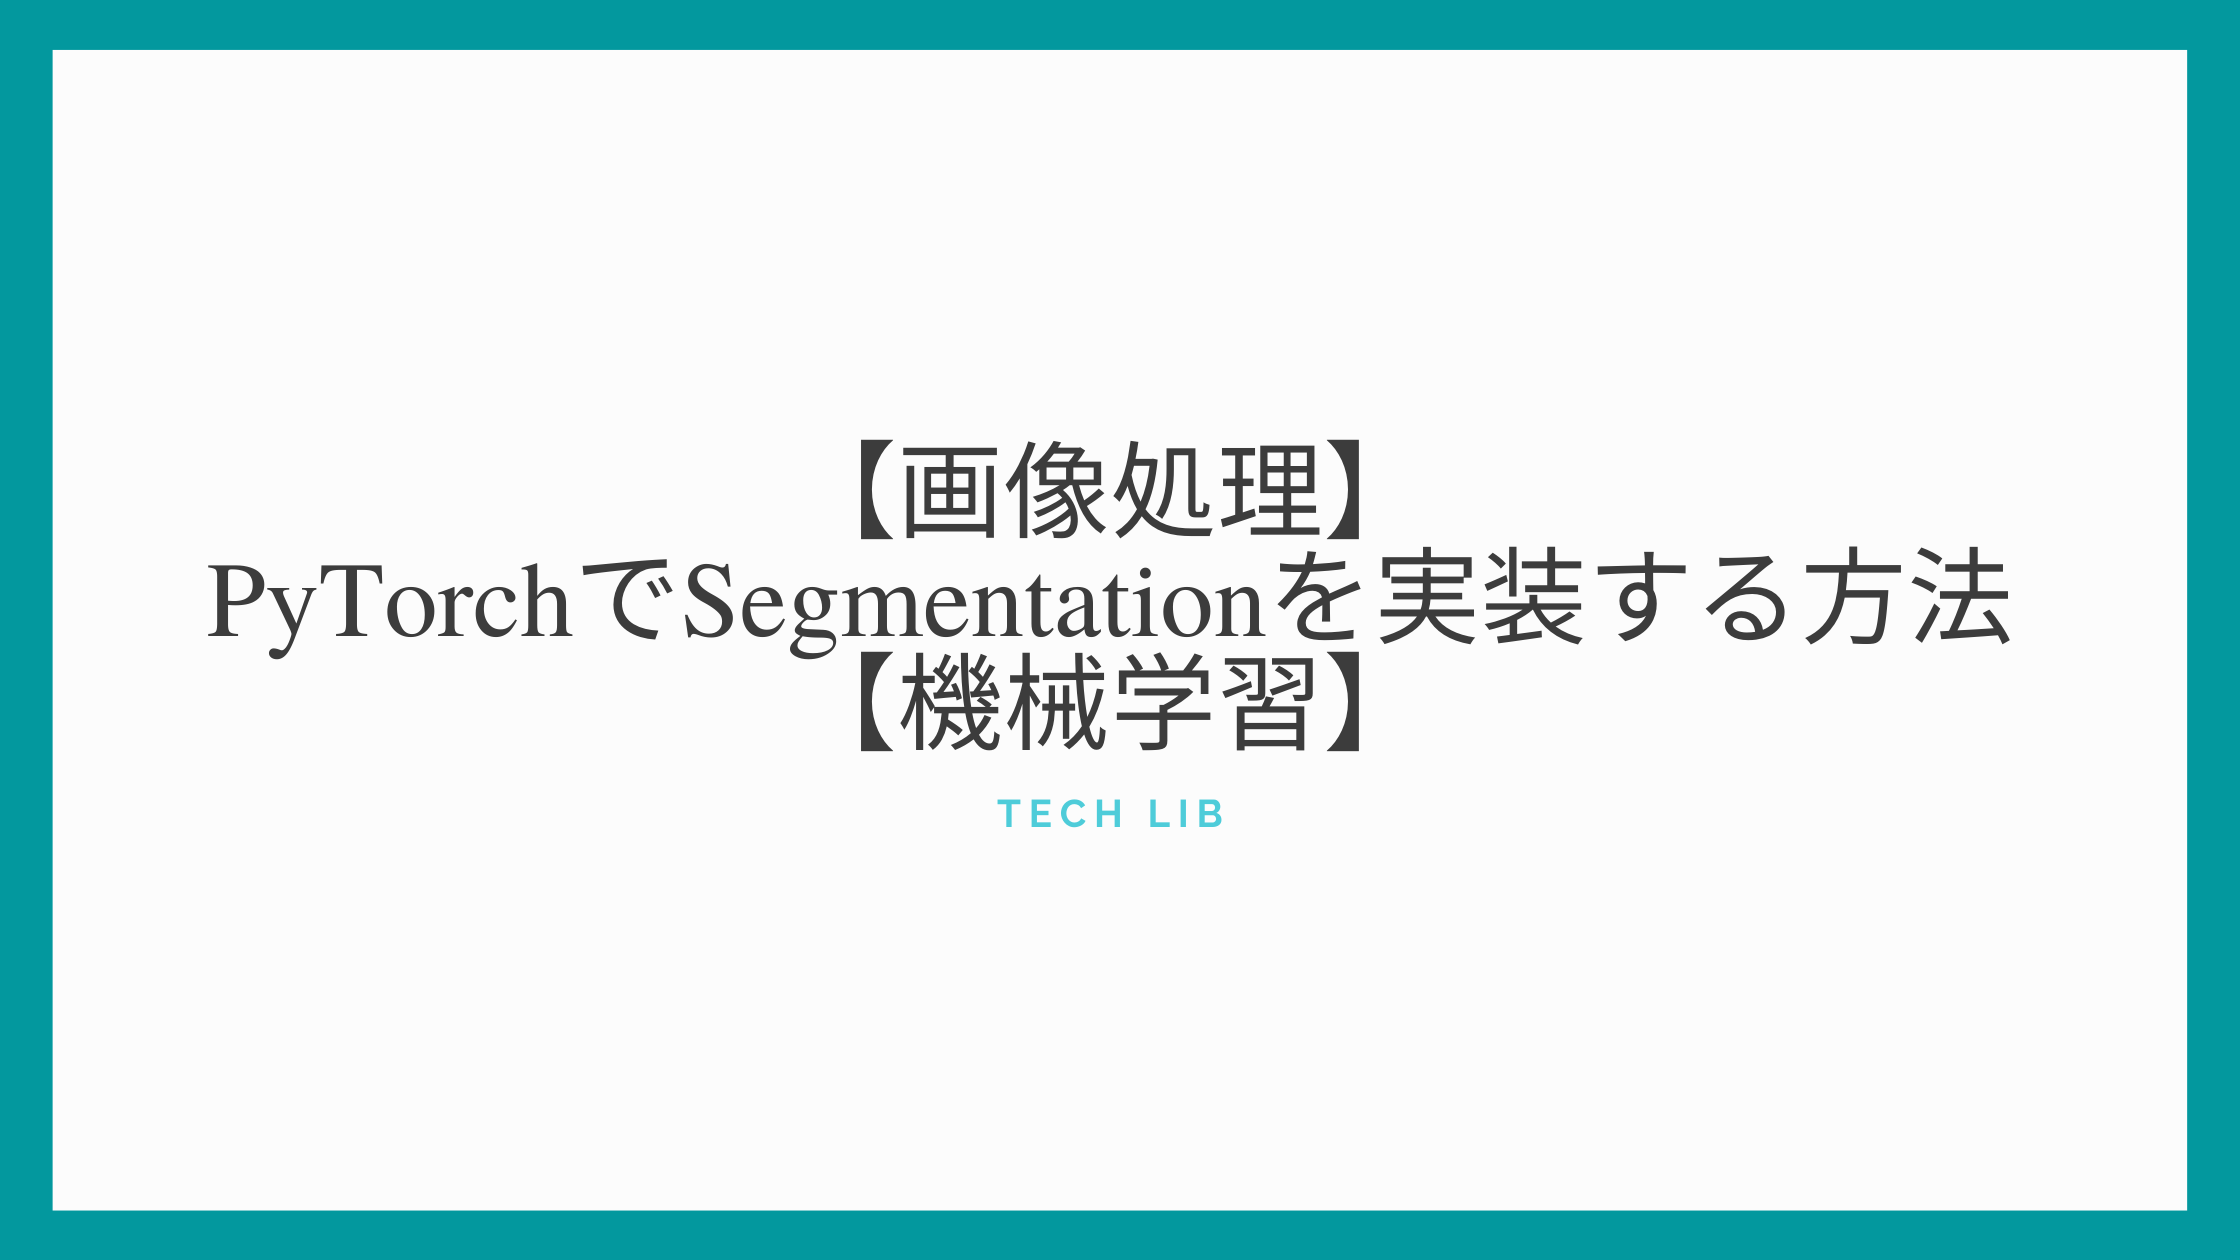 segmentation_title